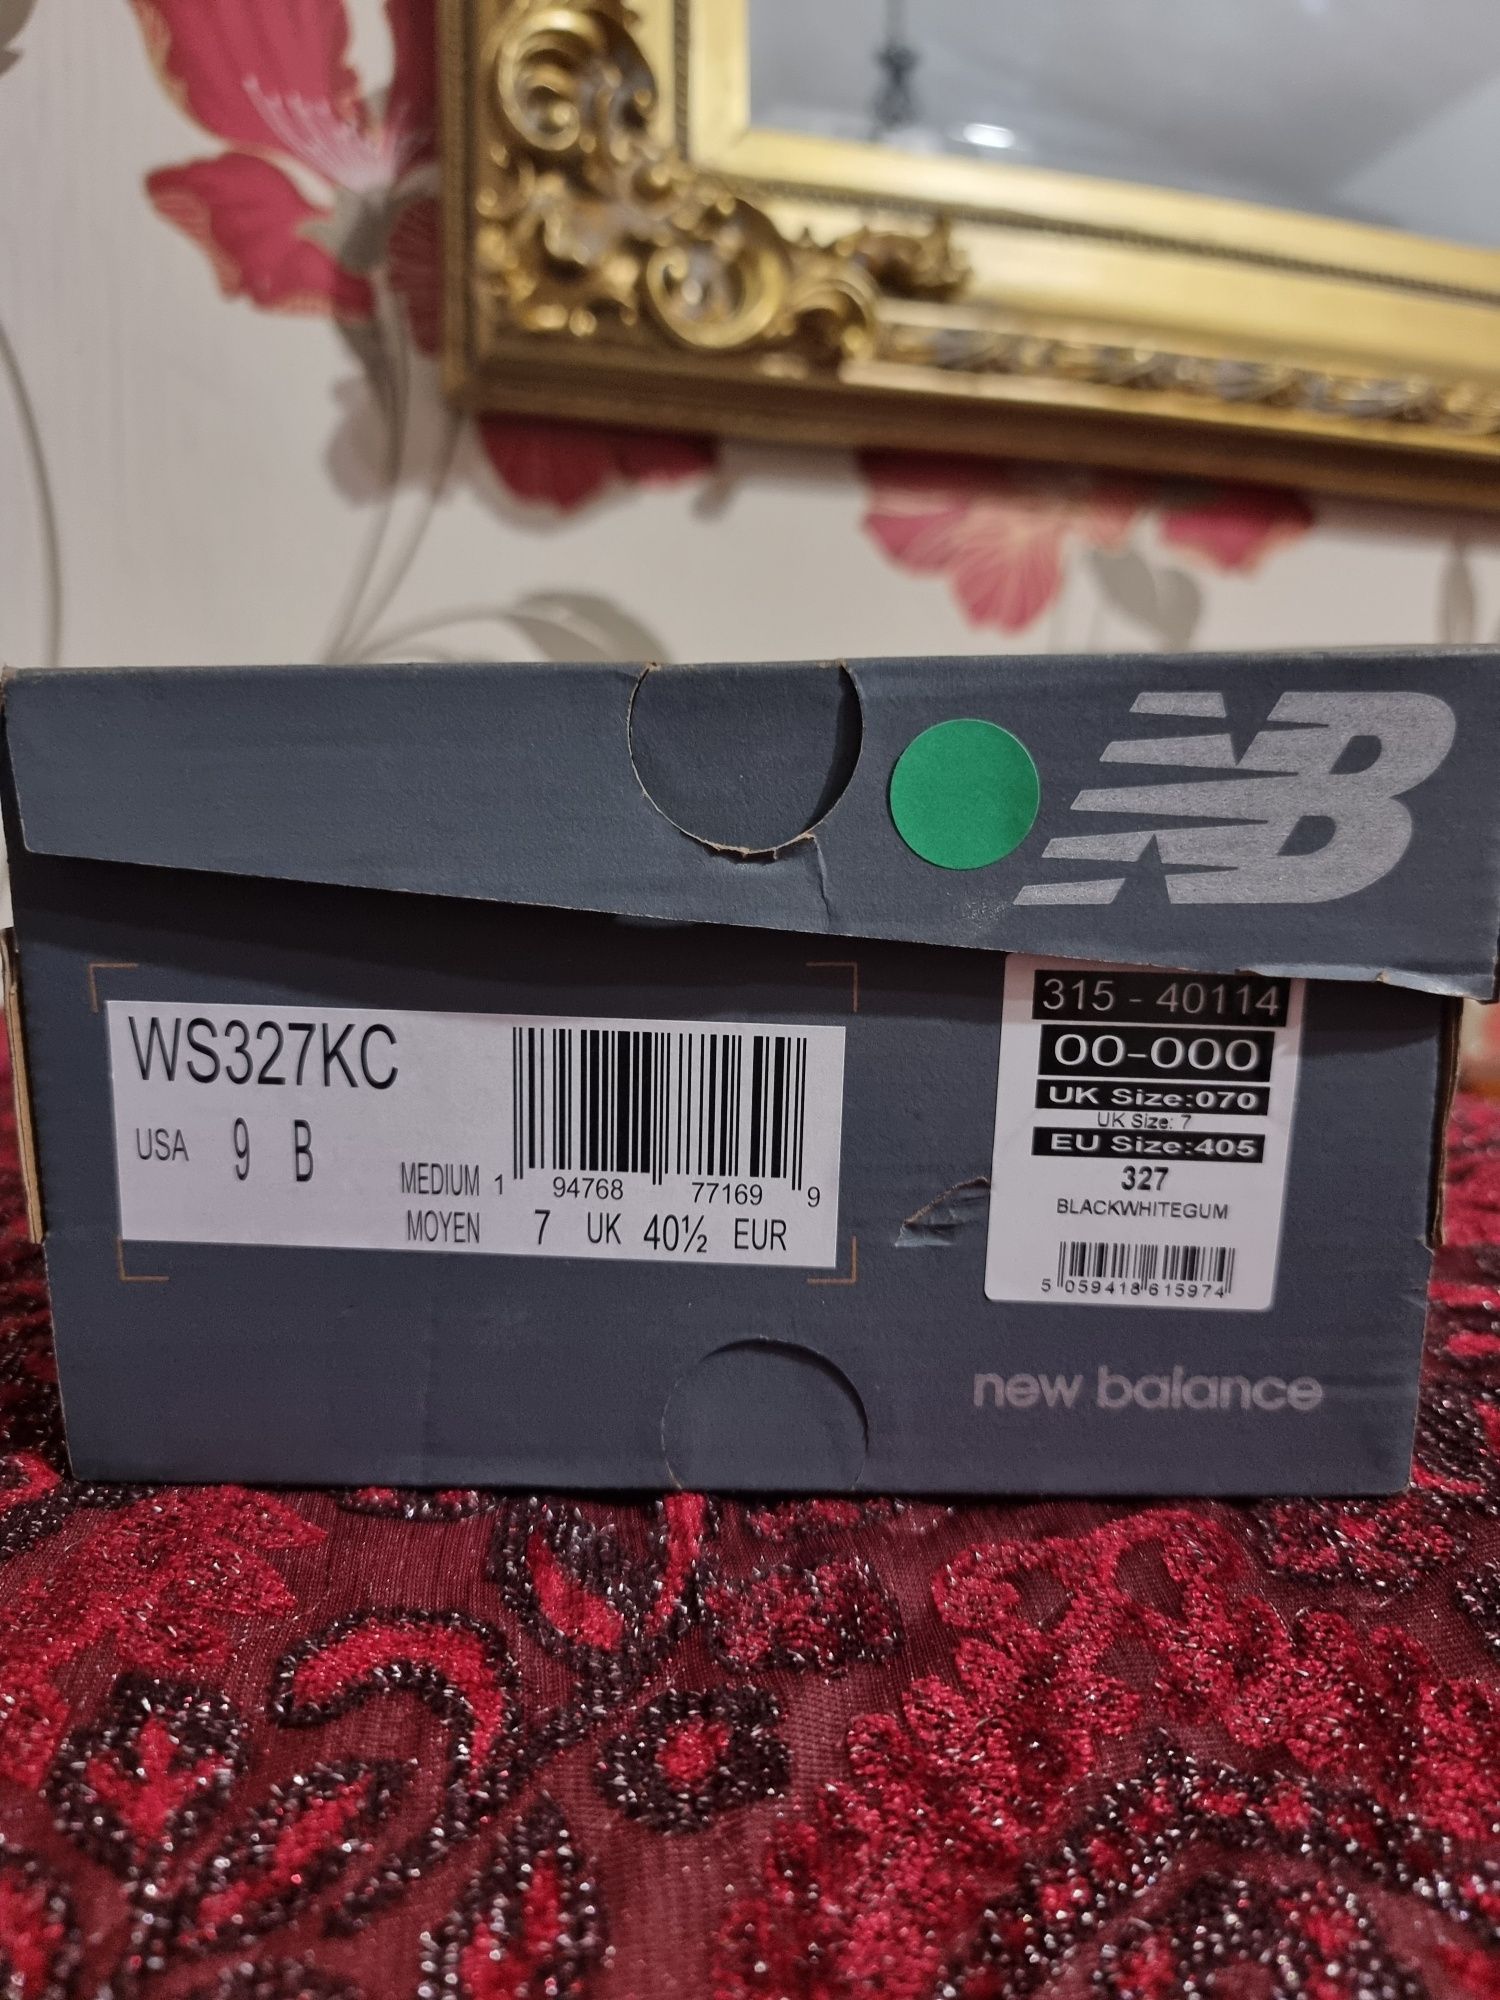 Adidasi new balance WS327KC